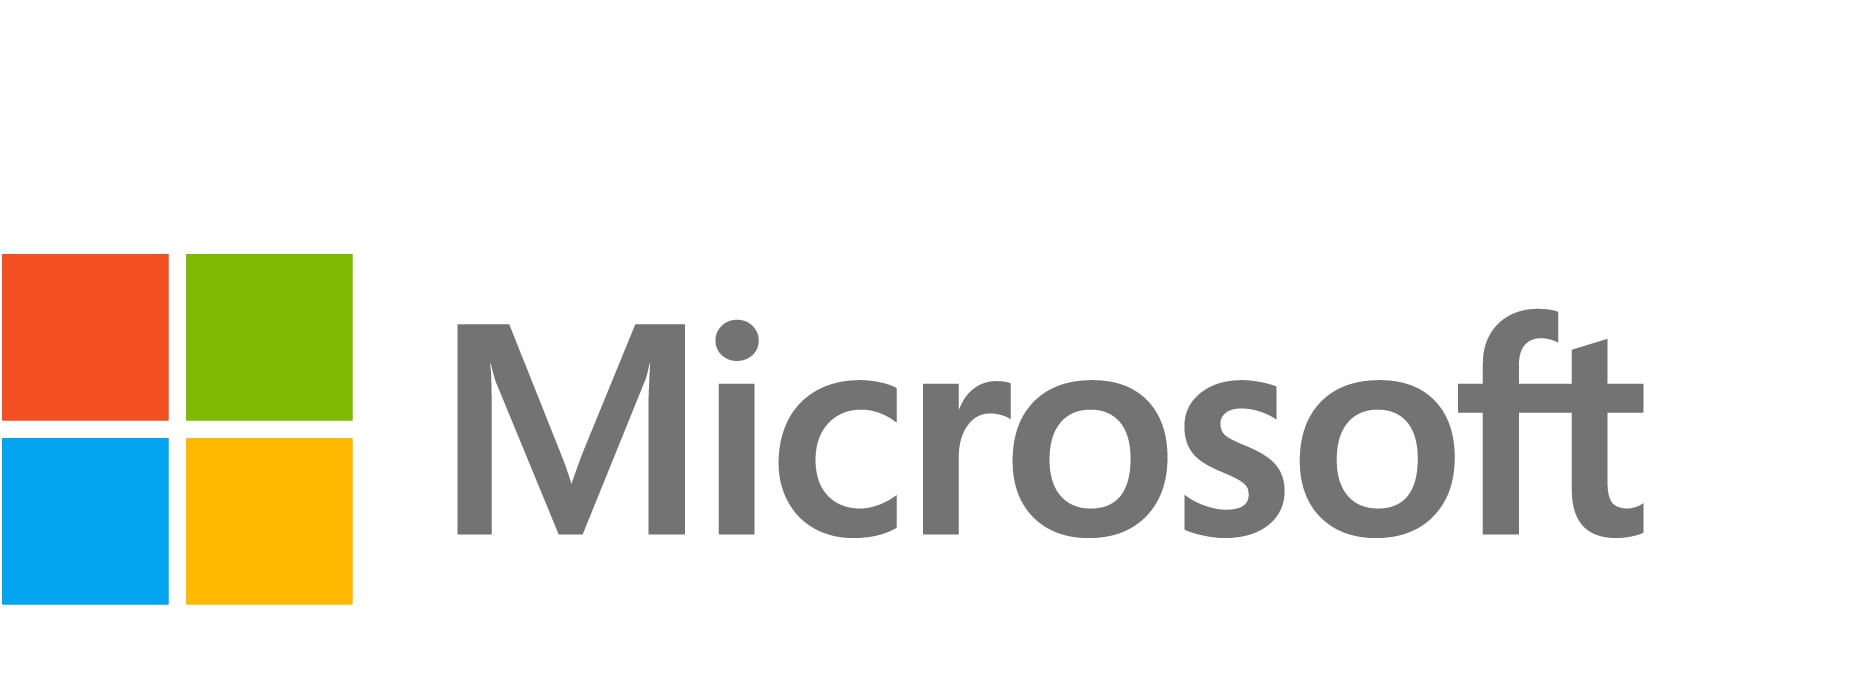 Microsoft Visio Professional - license & software assurance - 1 license